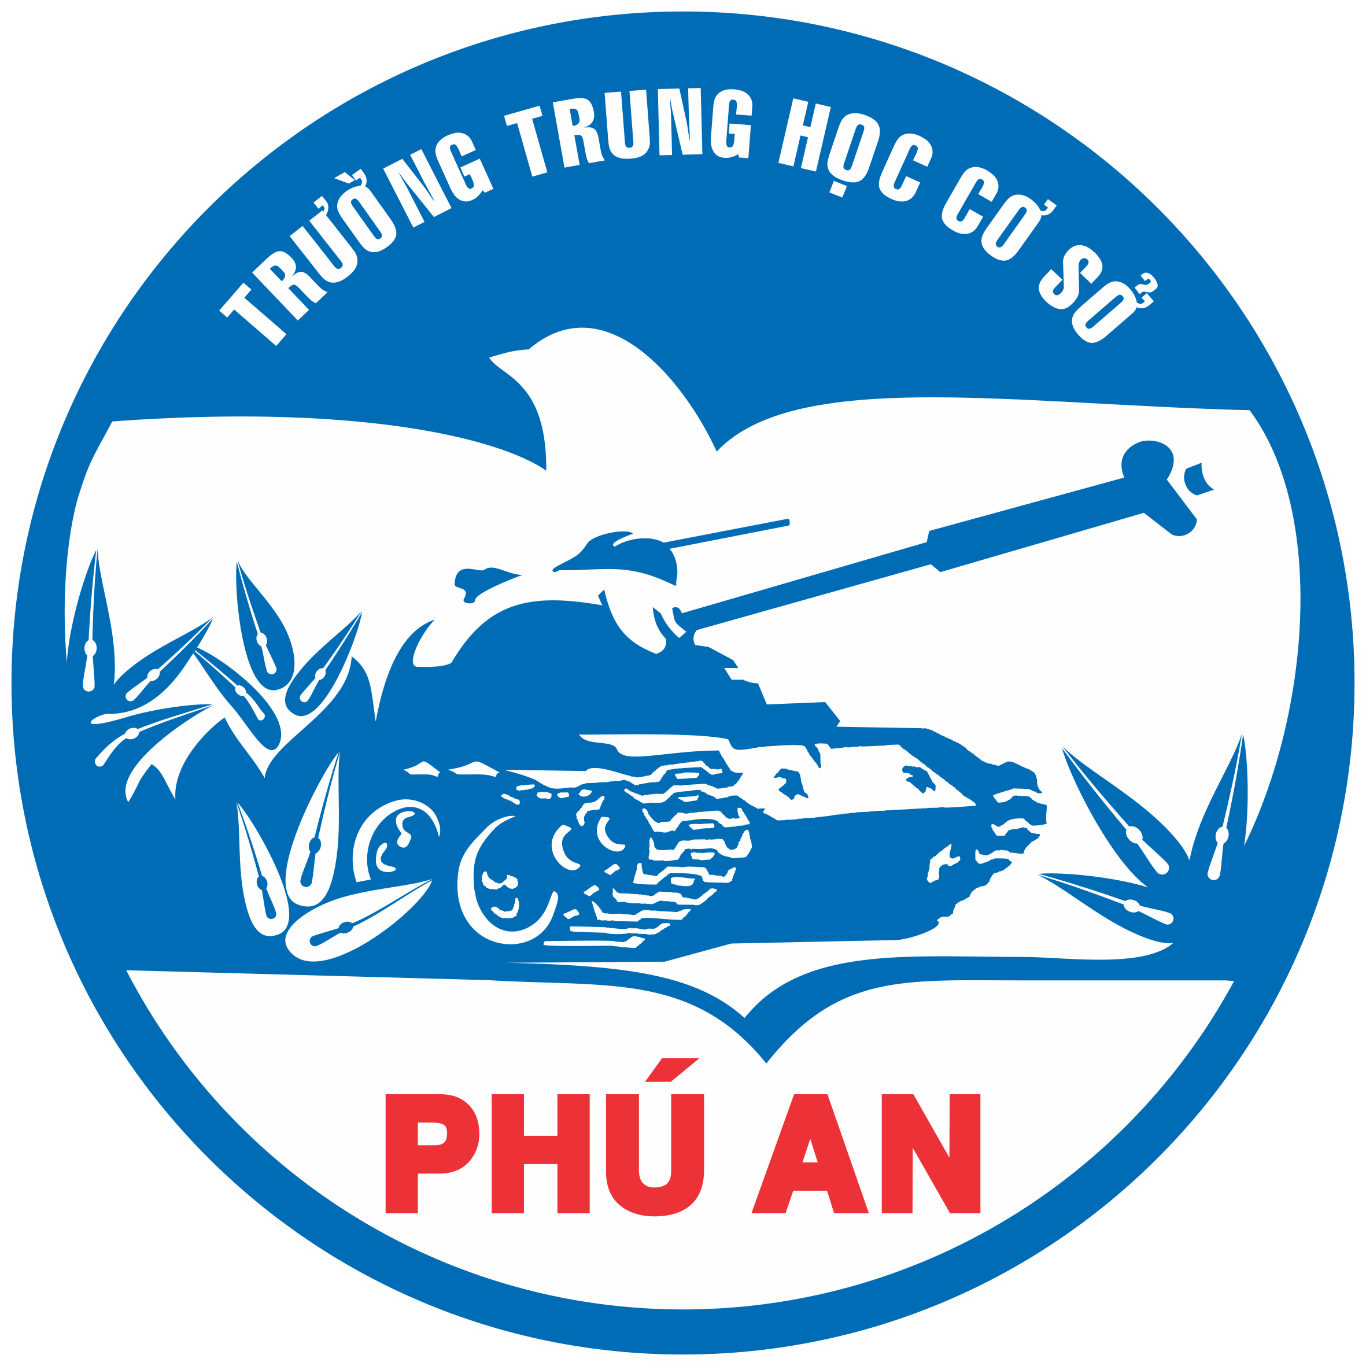 Trung học cơ sở Phú An